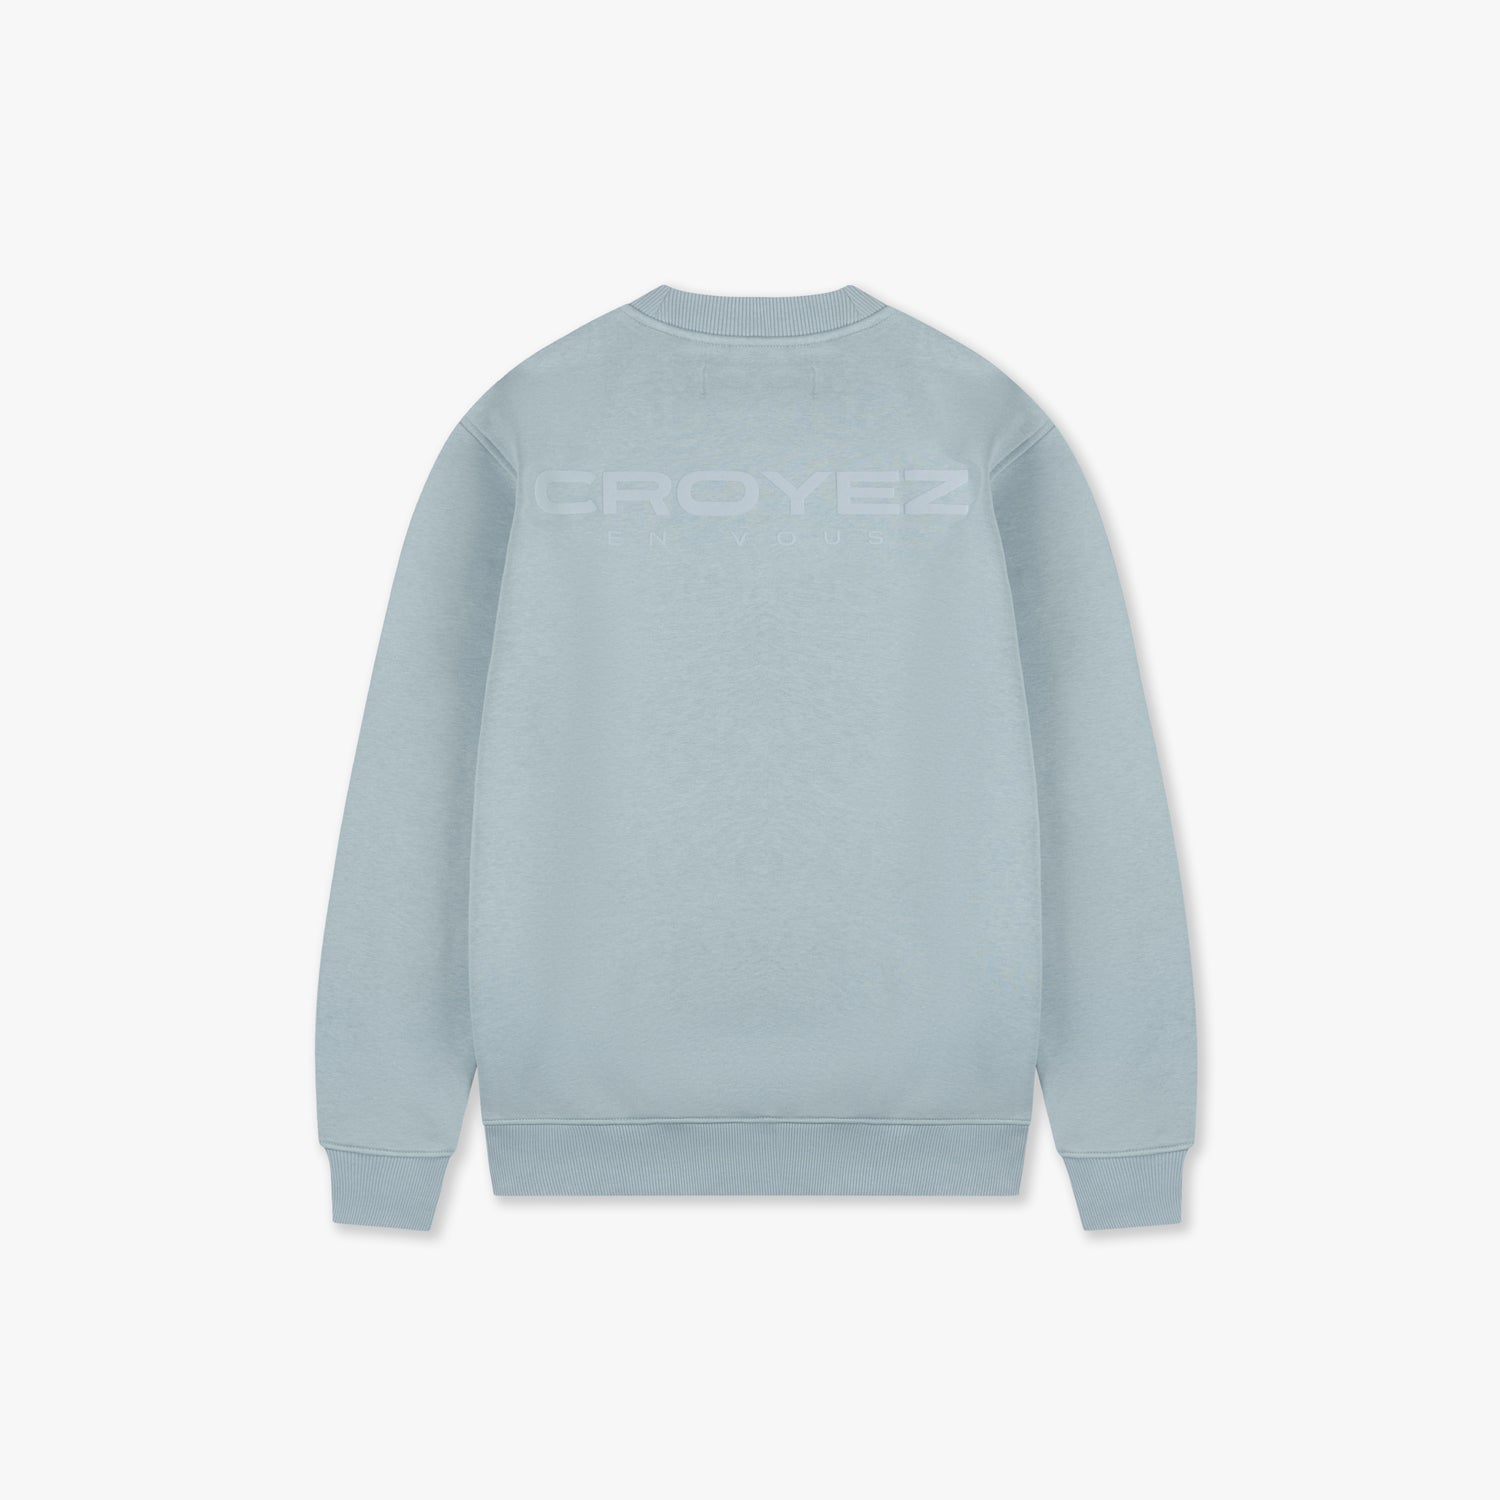 Croyez Organetto Sweater